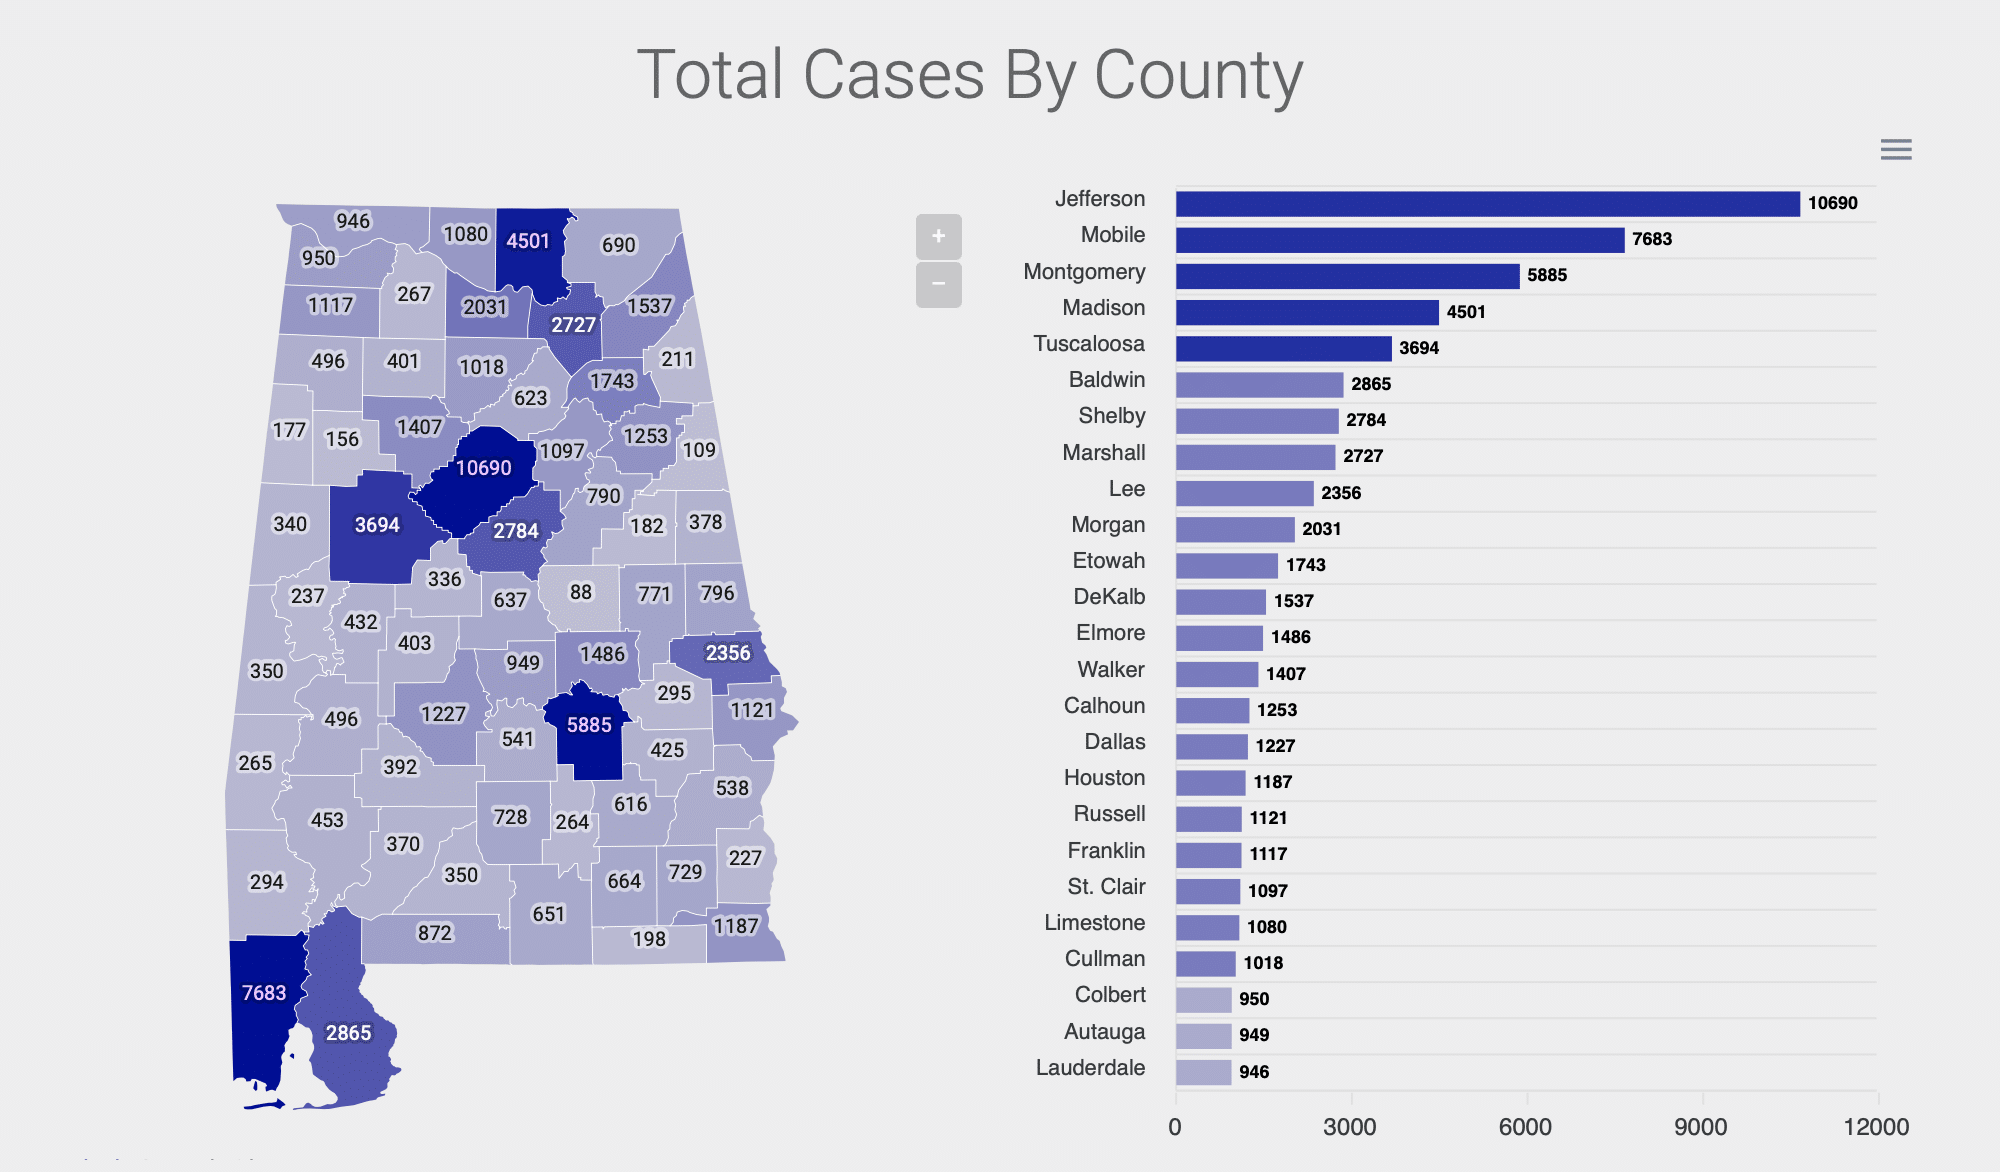 Coronavirus cases in Alabama - the numbers aren't good